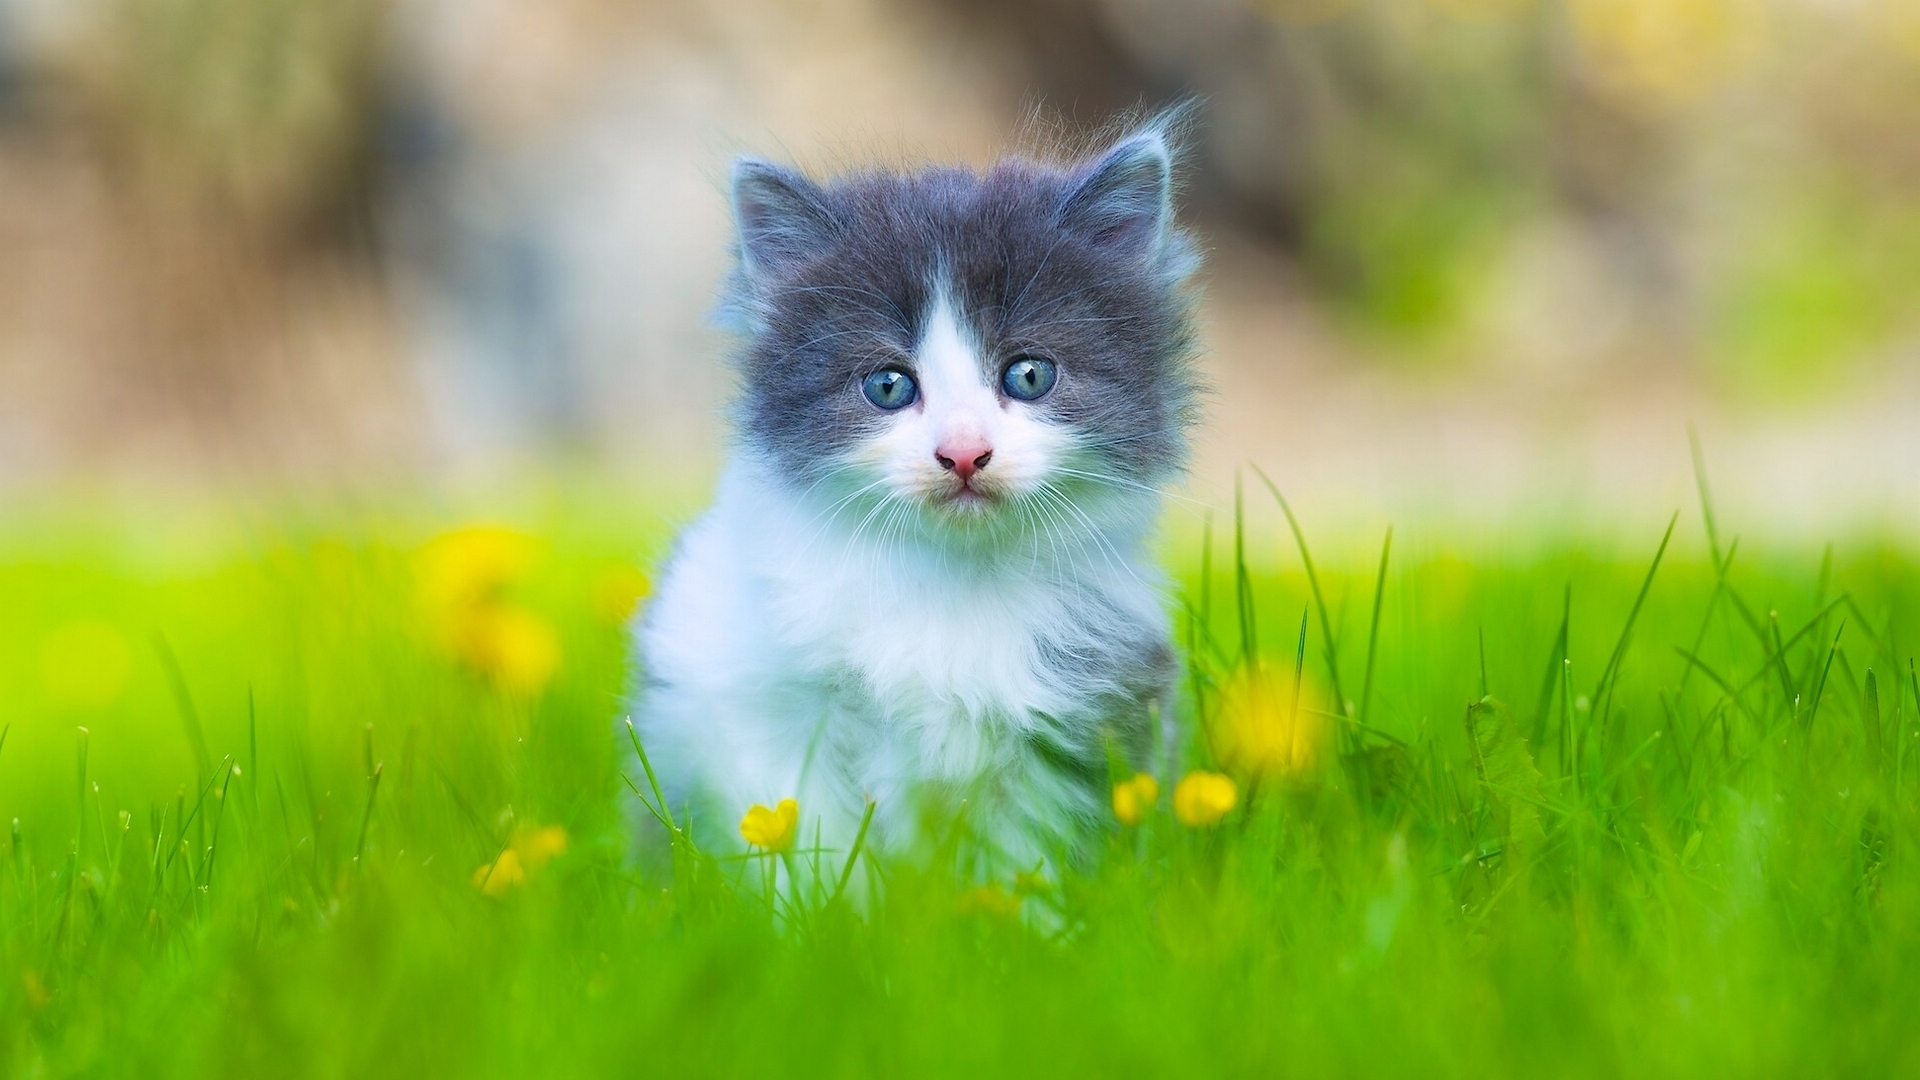 Cute Baby Kitten Standing On Green Grass Field 4k Wallpaper